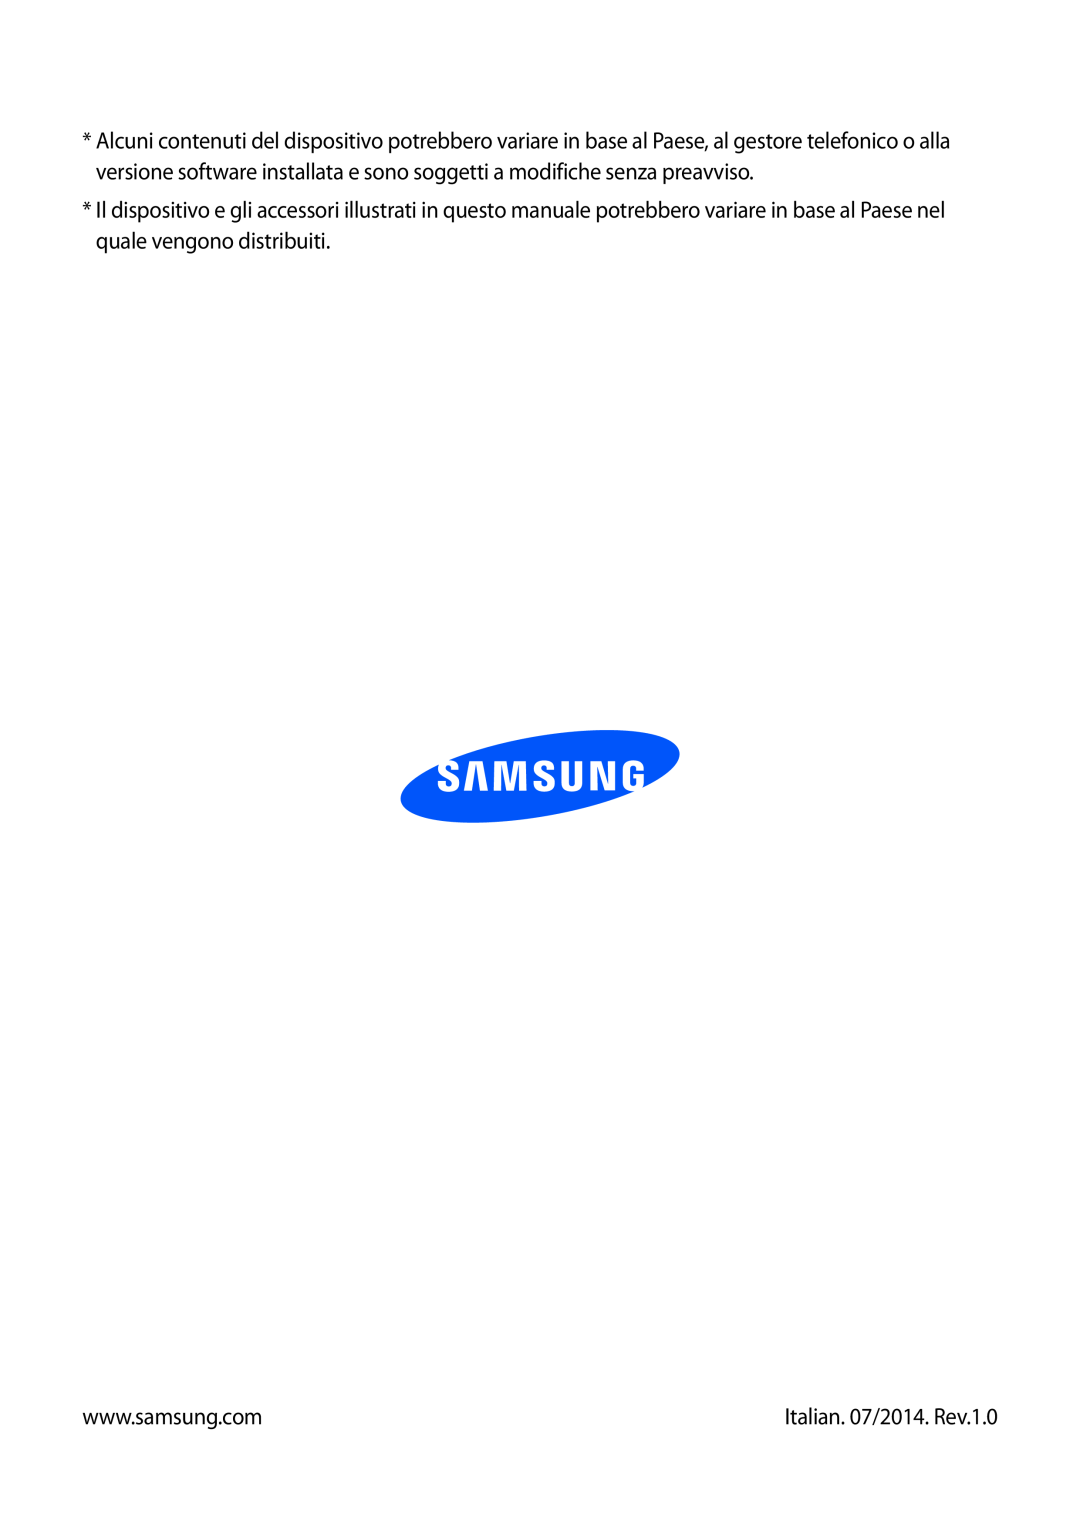 Samsung GT-N7100VSDTIM, GT-N7100ZRDTUR, GT-N7100RWDWIN, GT-N7100TADTUR, GT-N7100RWDITV manual Italian. 07/2014. Rev.1.0 